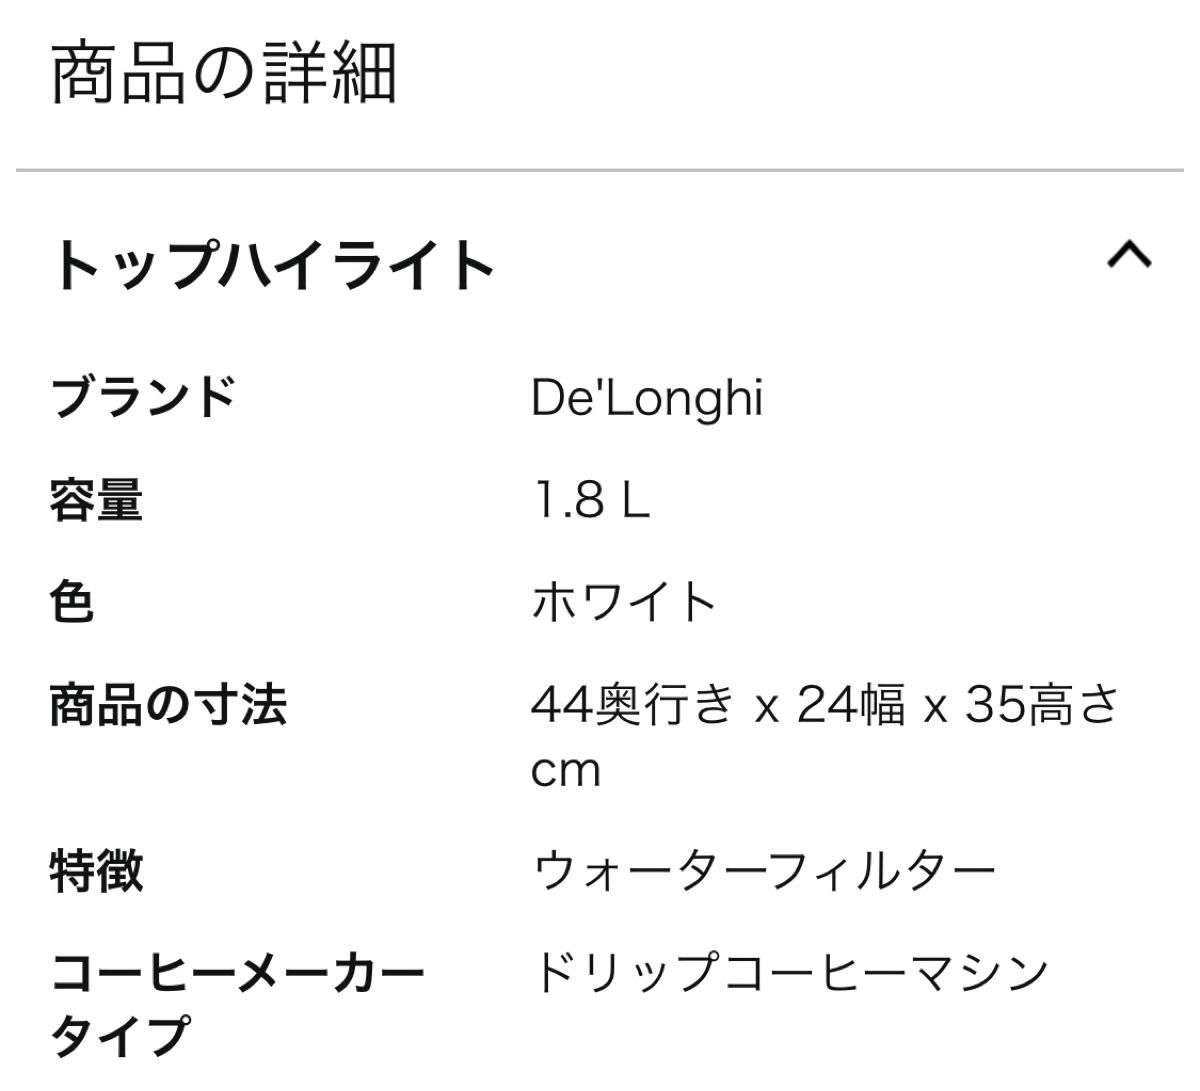 De’Longhi (デロンギ) 全自動コーヒーマシン マグニフィカスタート ECAM22020W 新品未開封品